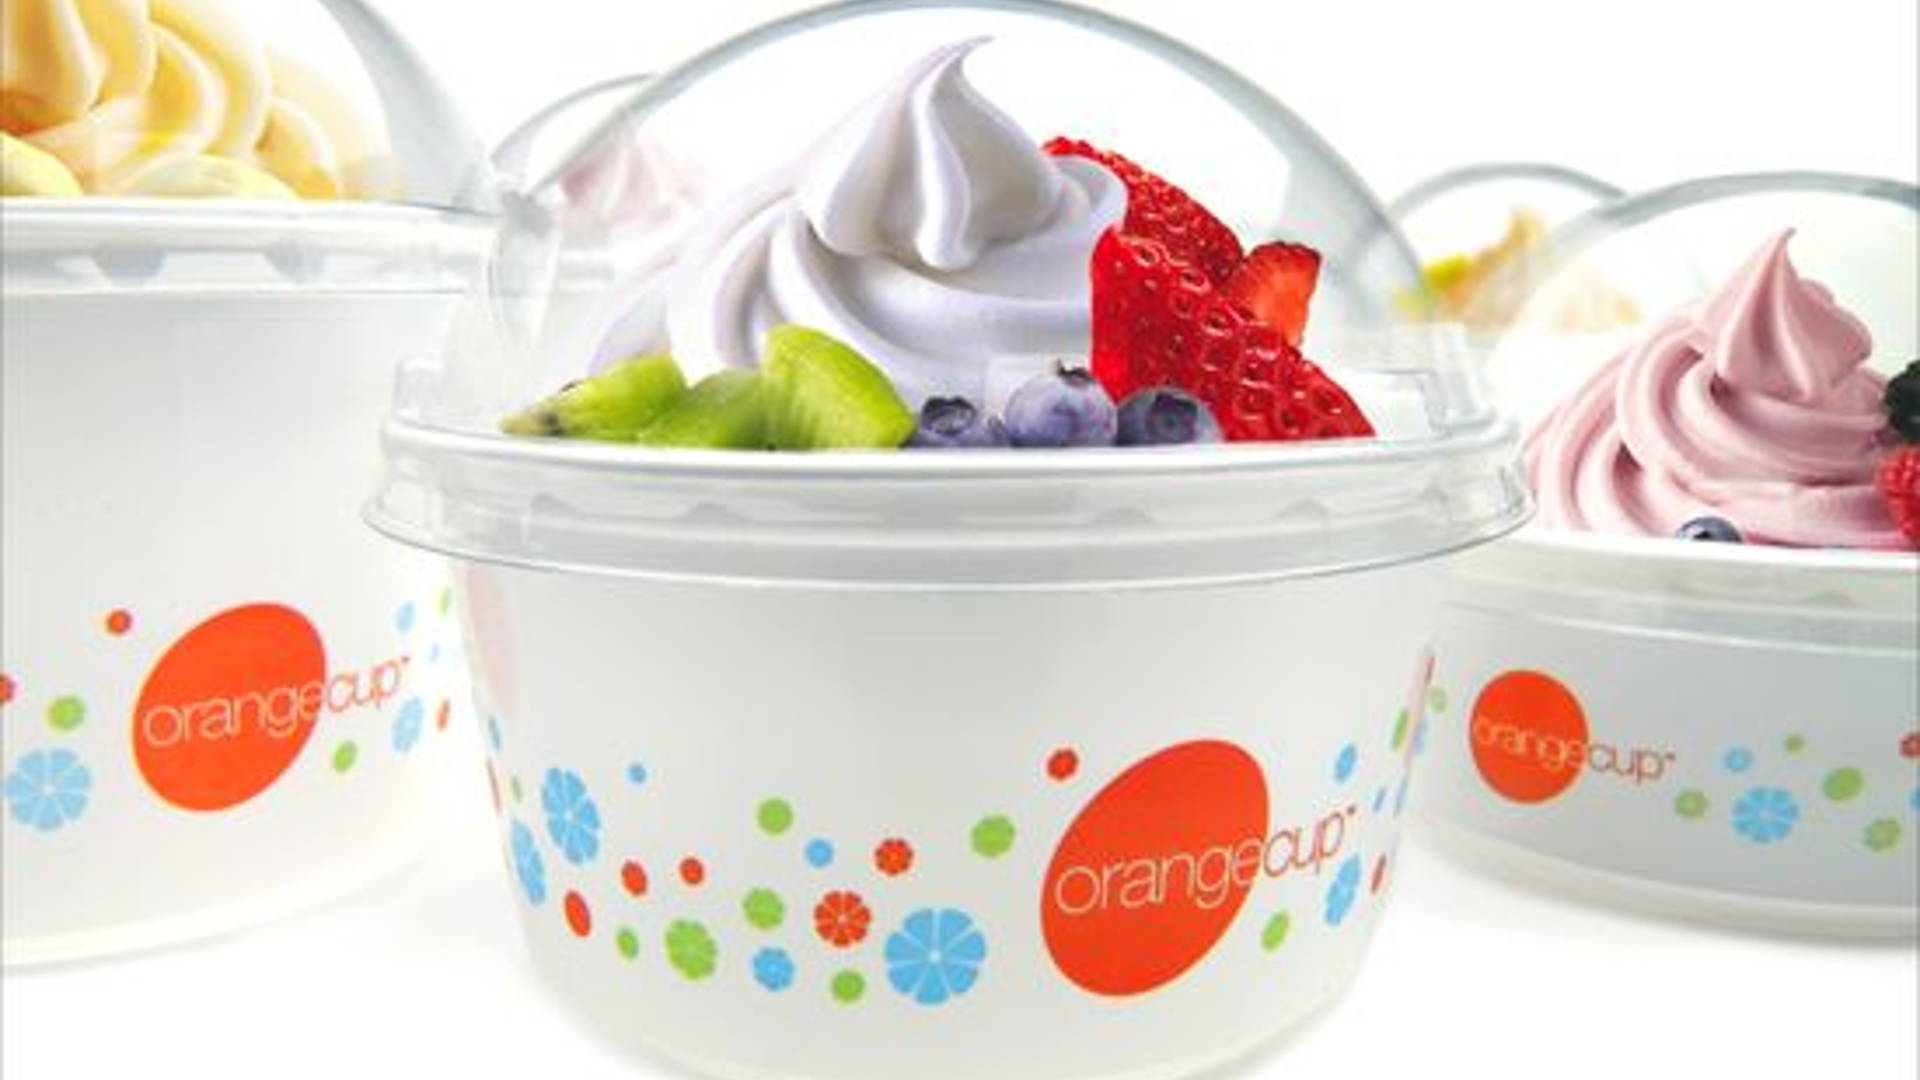 Featured image for OrangeCup Frozen Yogurt